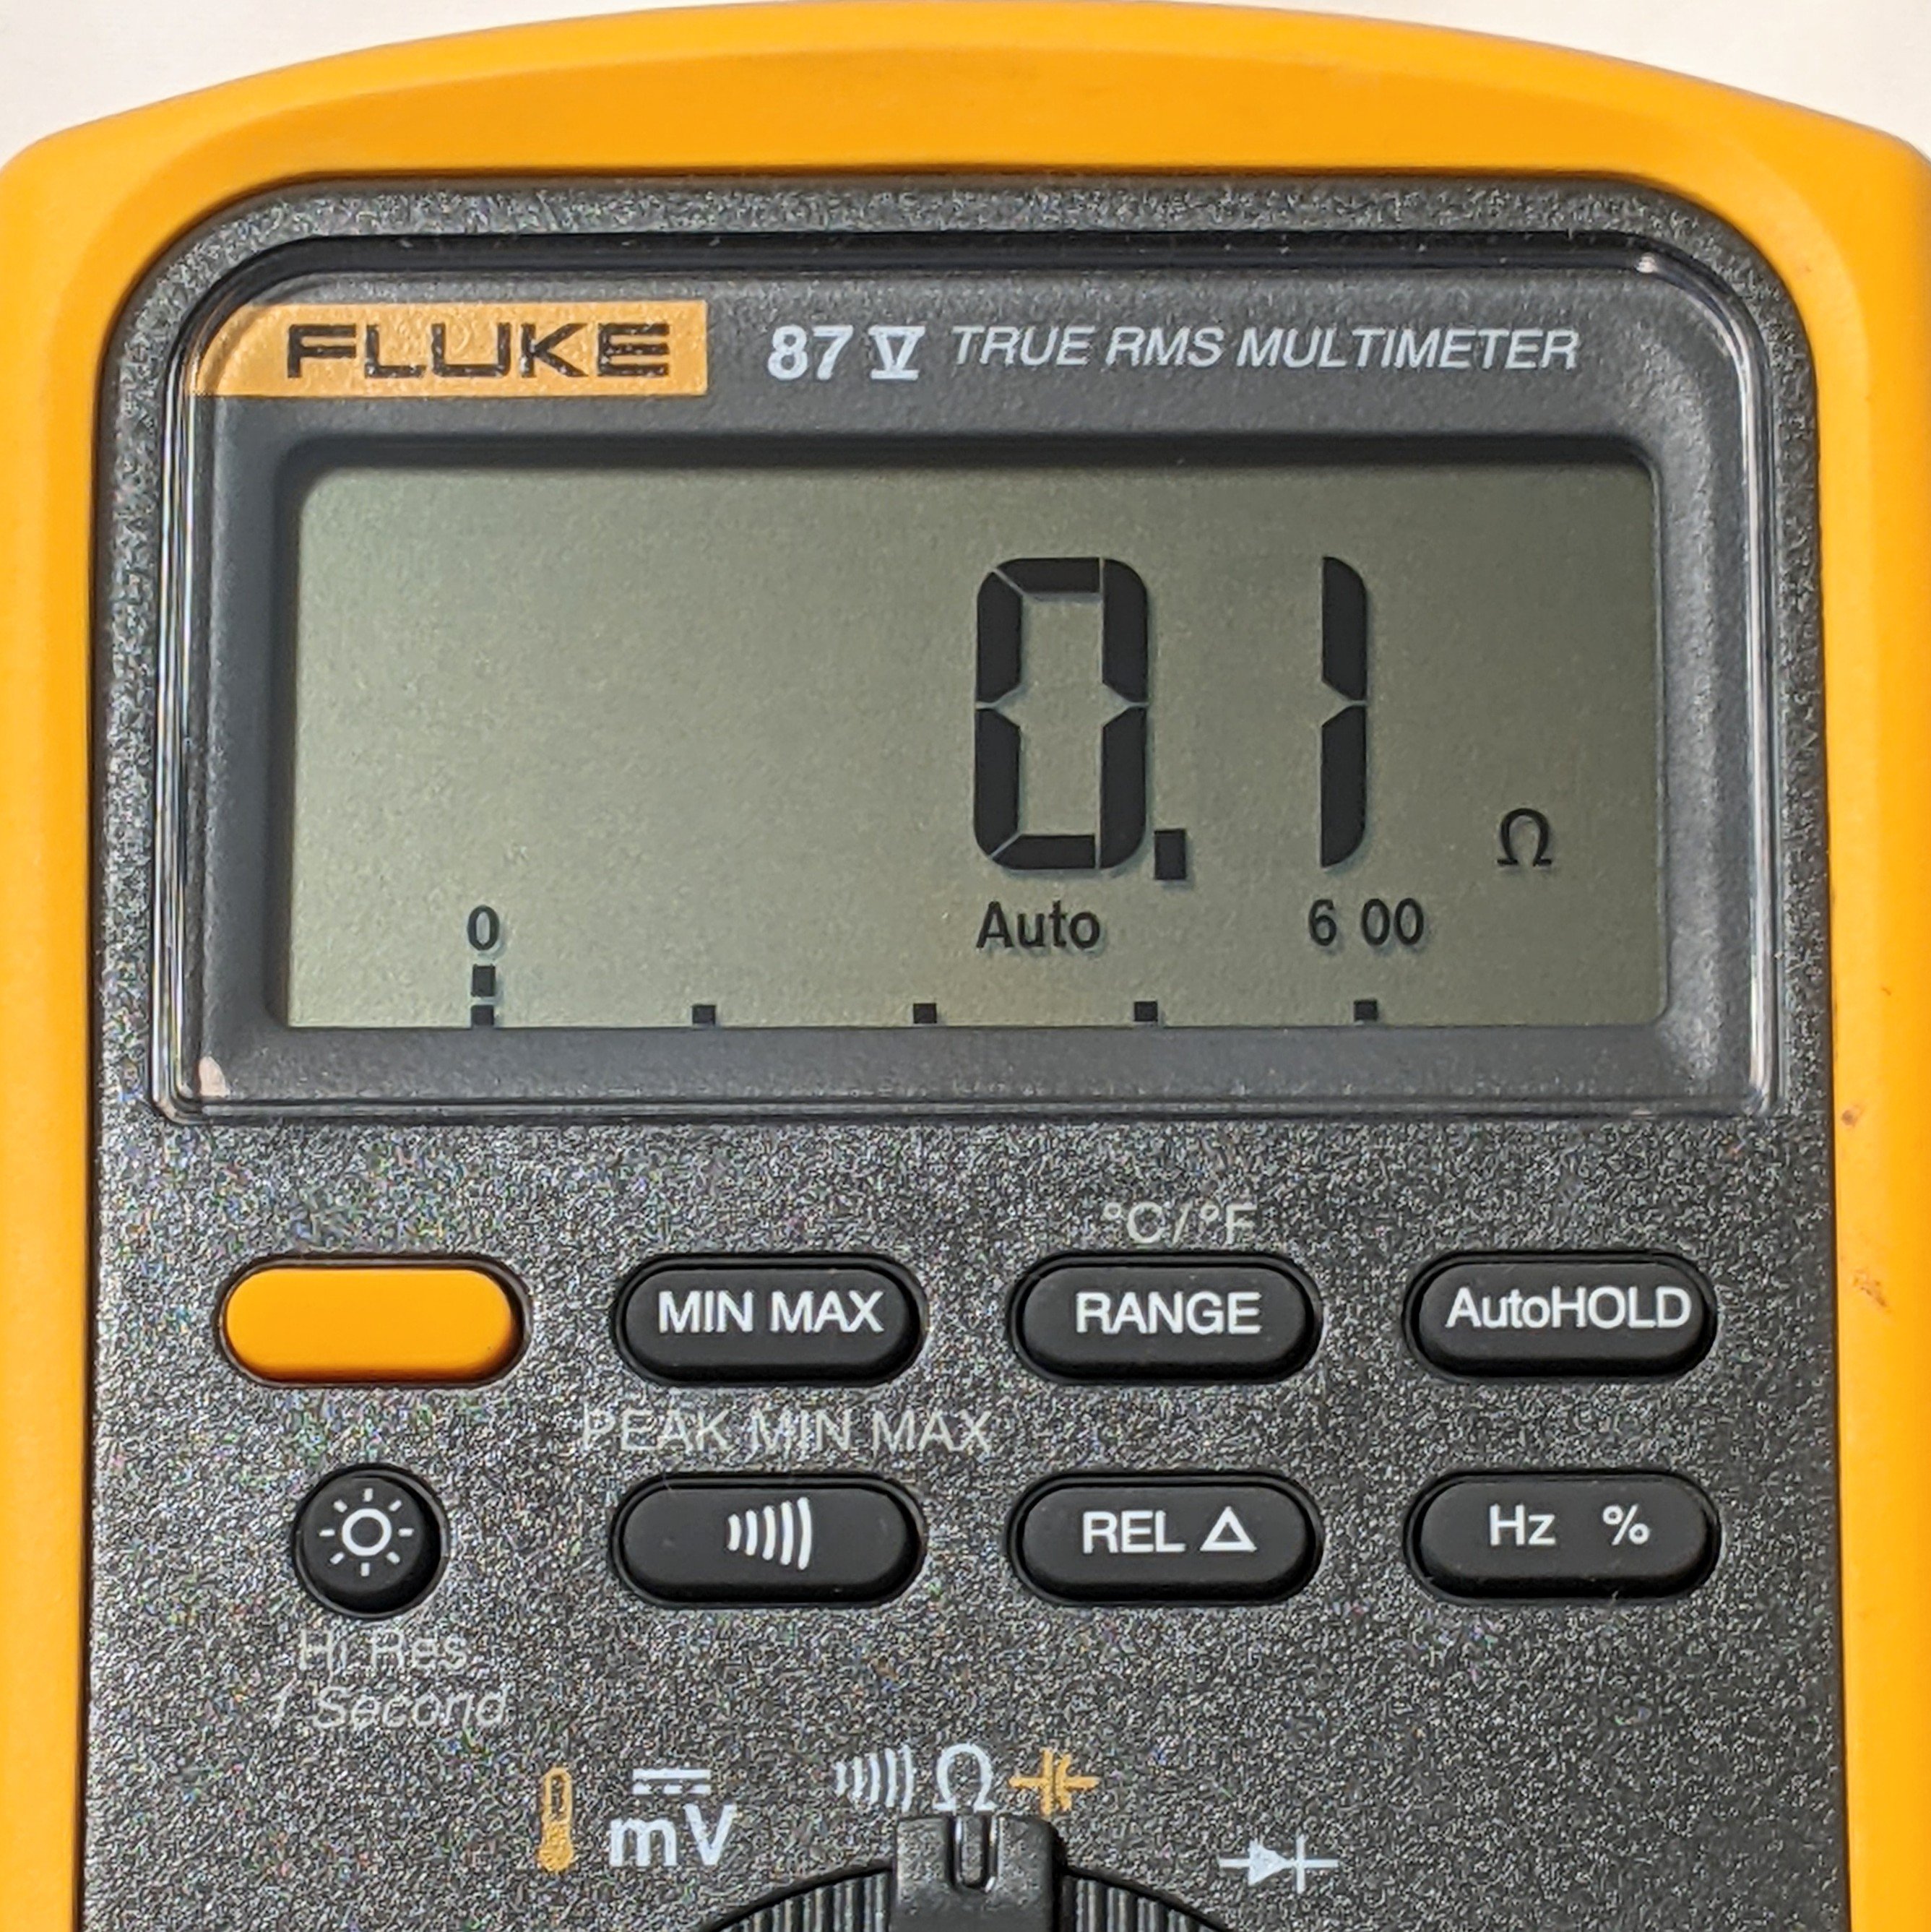 Avis de sécurité Fluke 8x V : mesure en ohms correcte